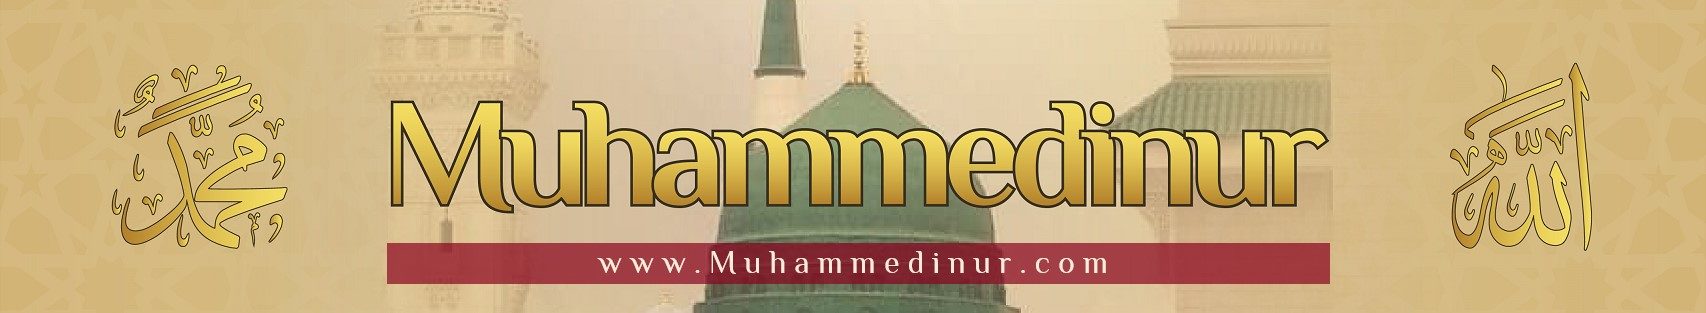 Muhammedinur